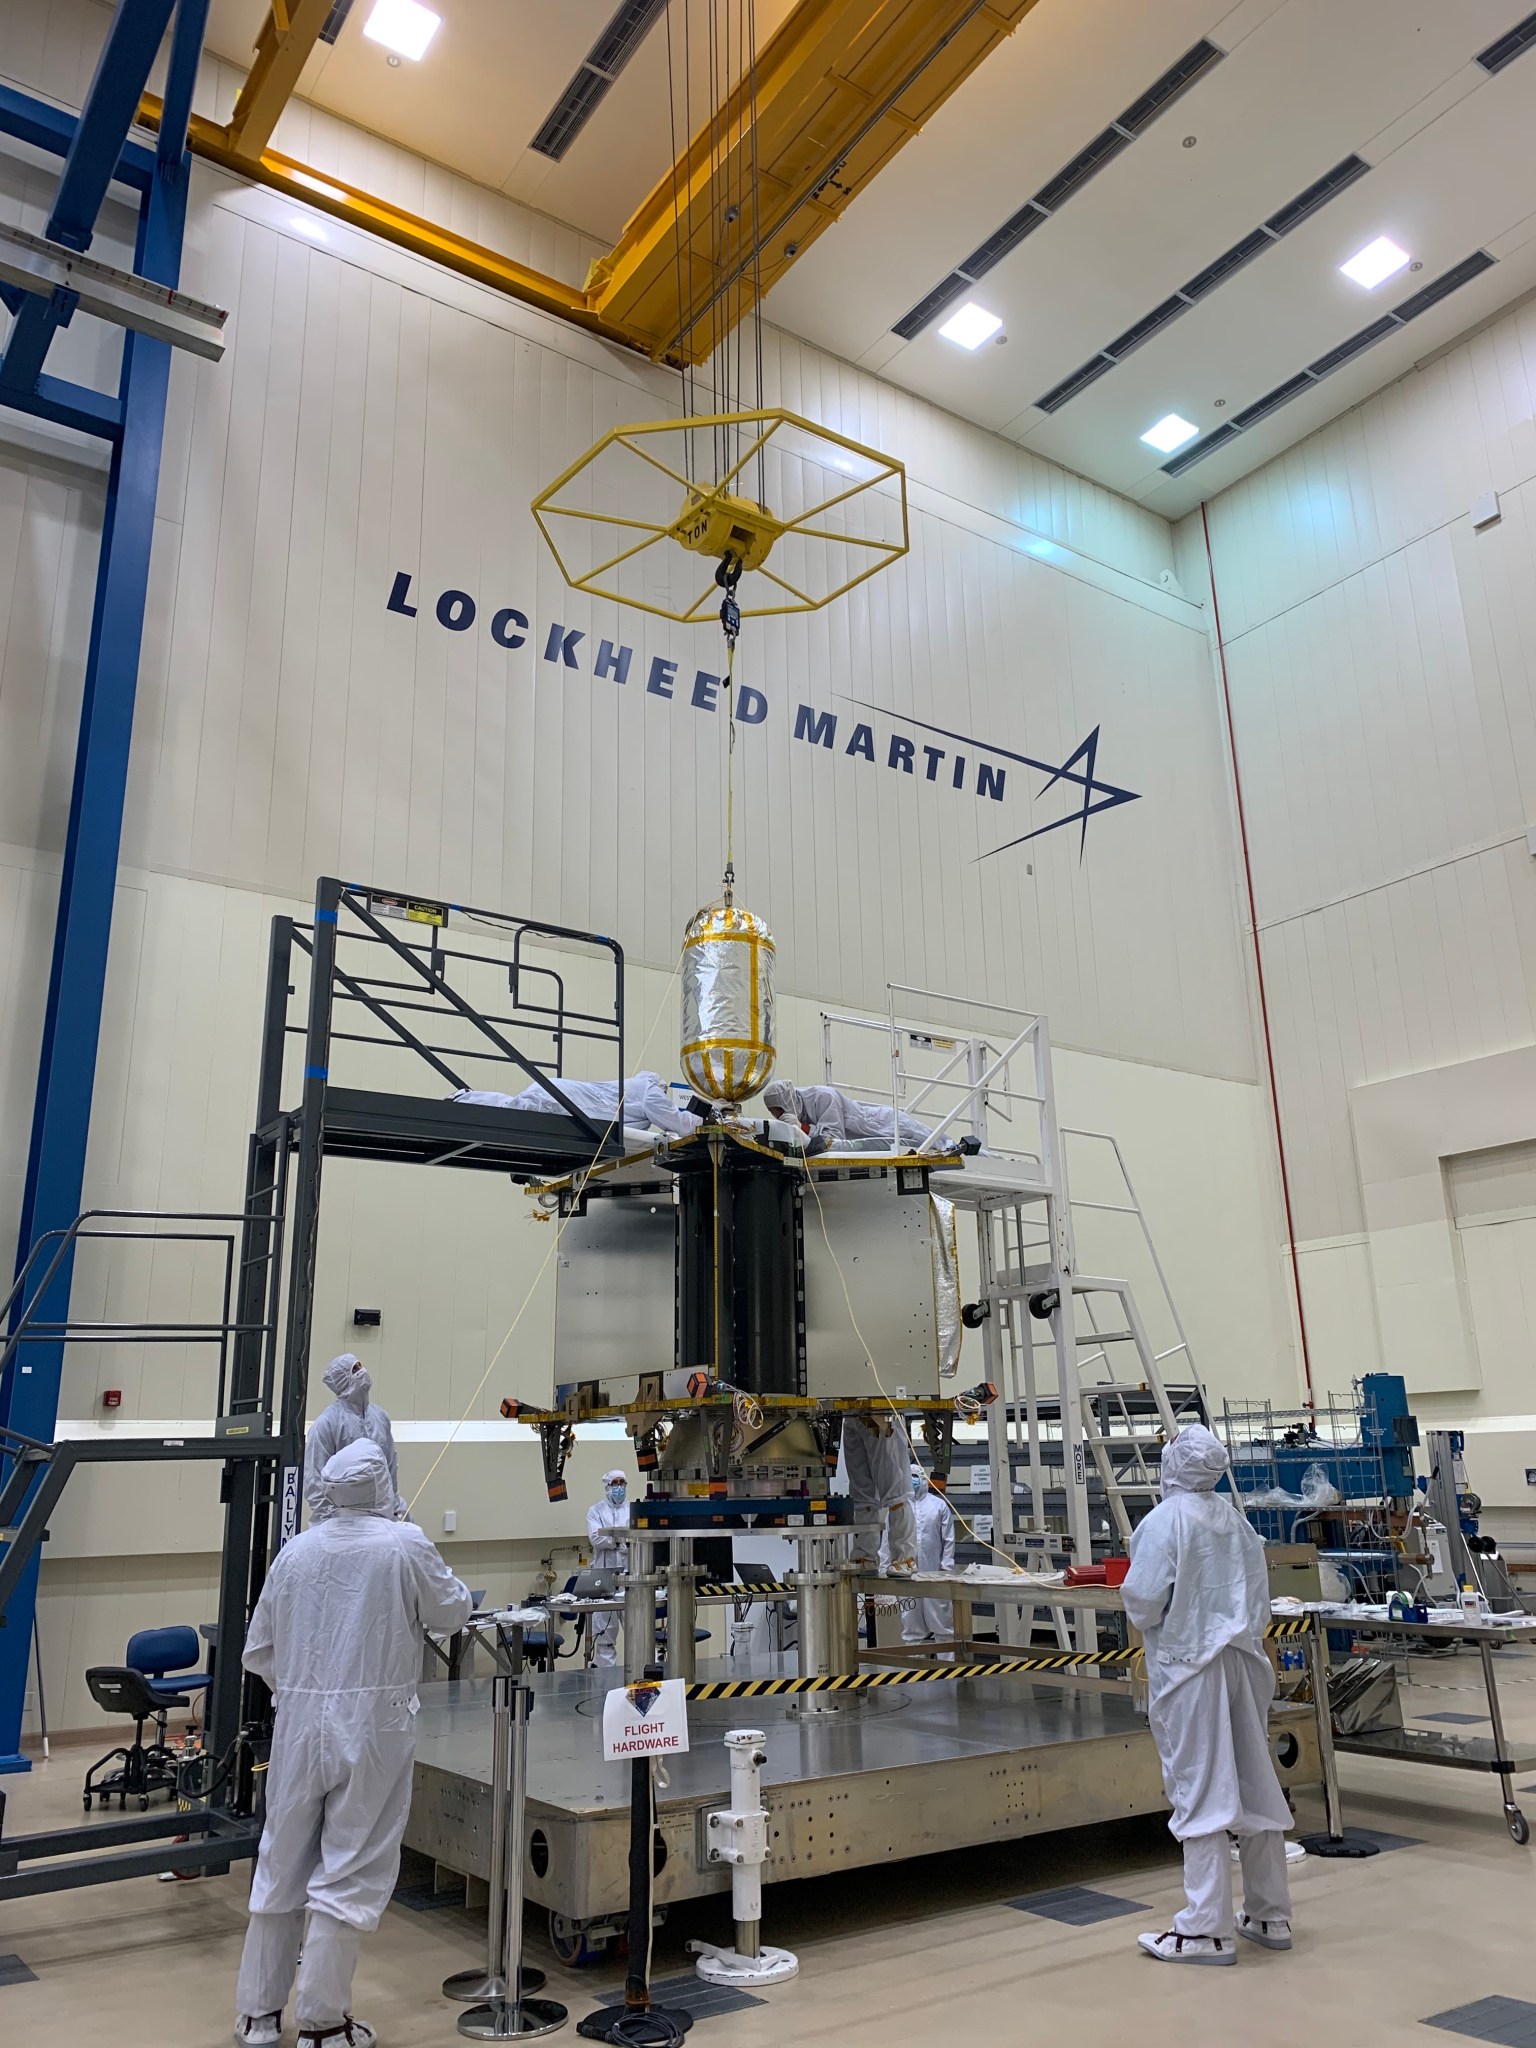 Oxygen propellant tank installed on Lucy spacecraft